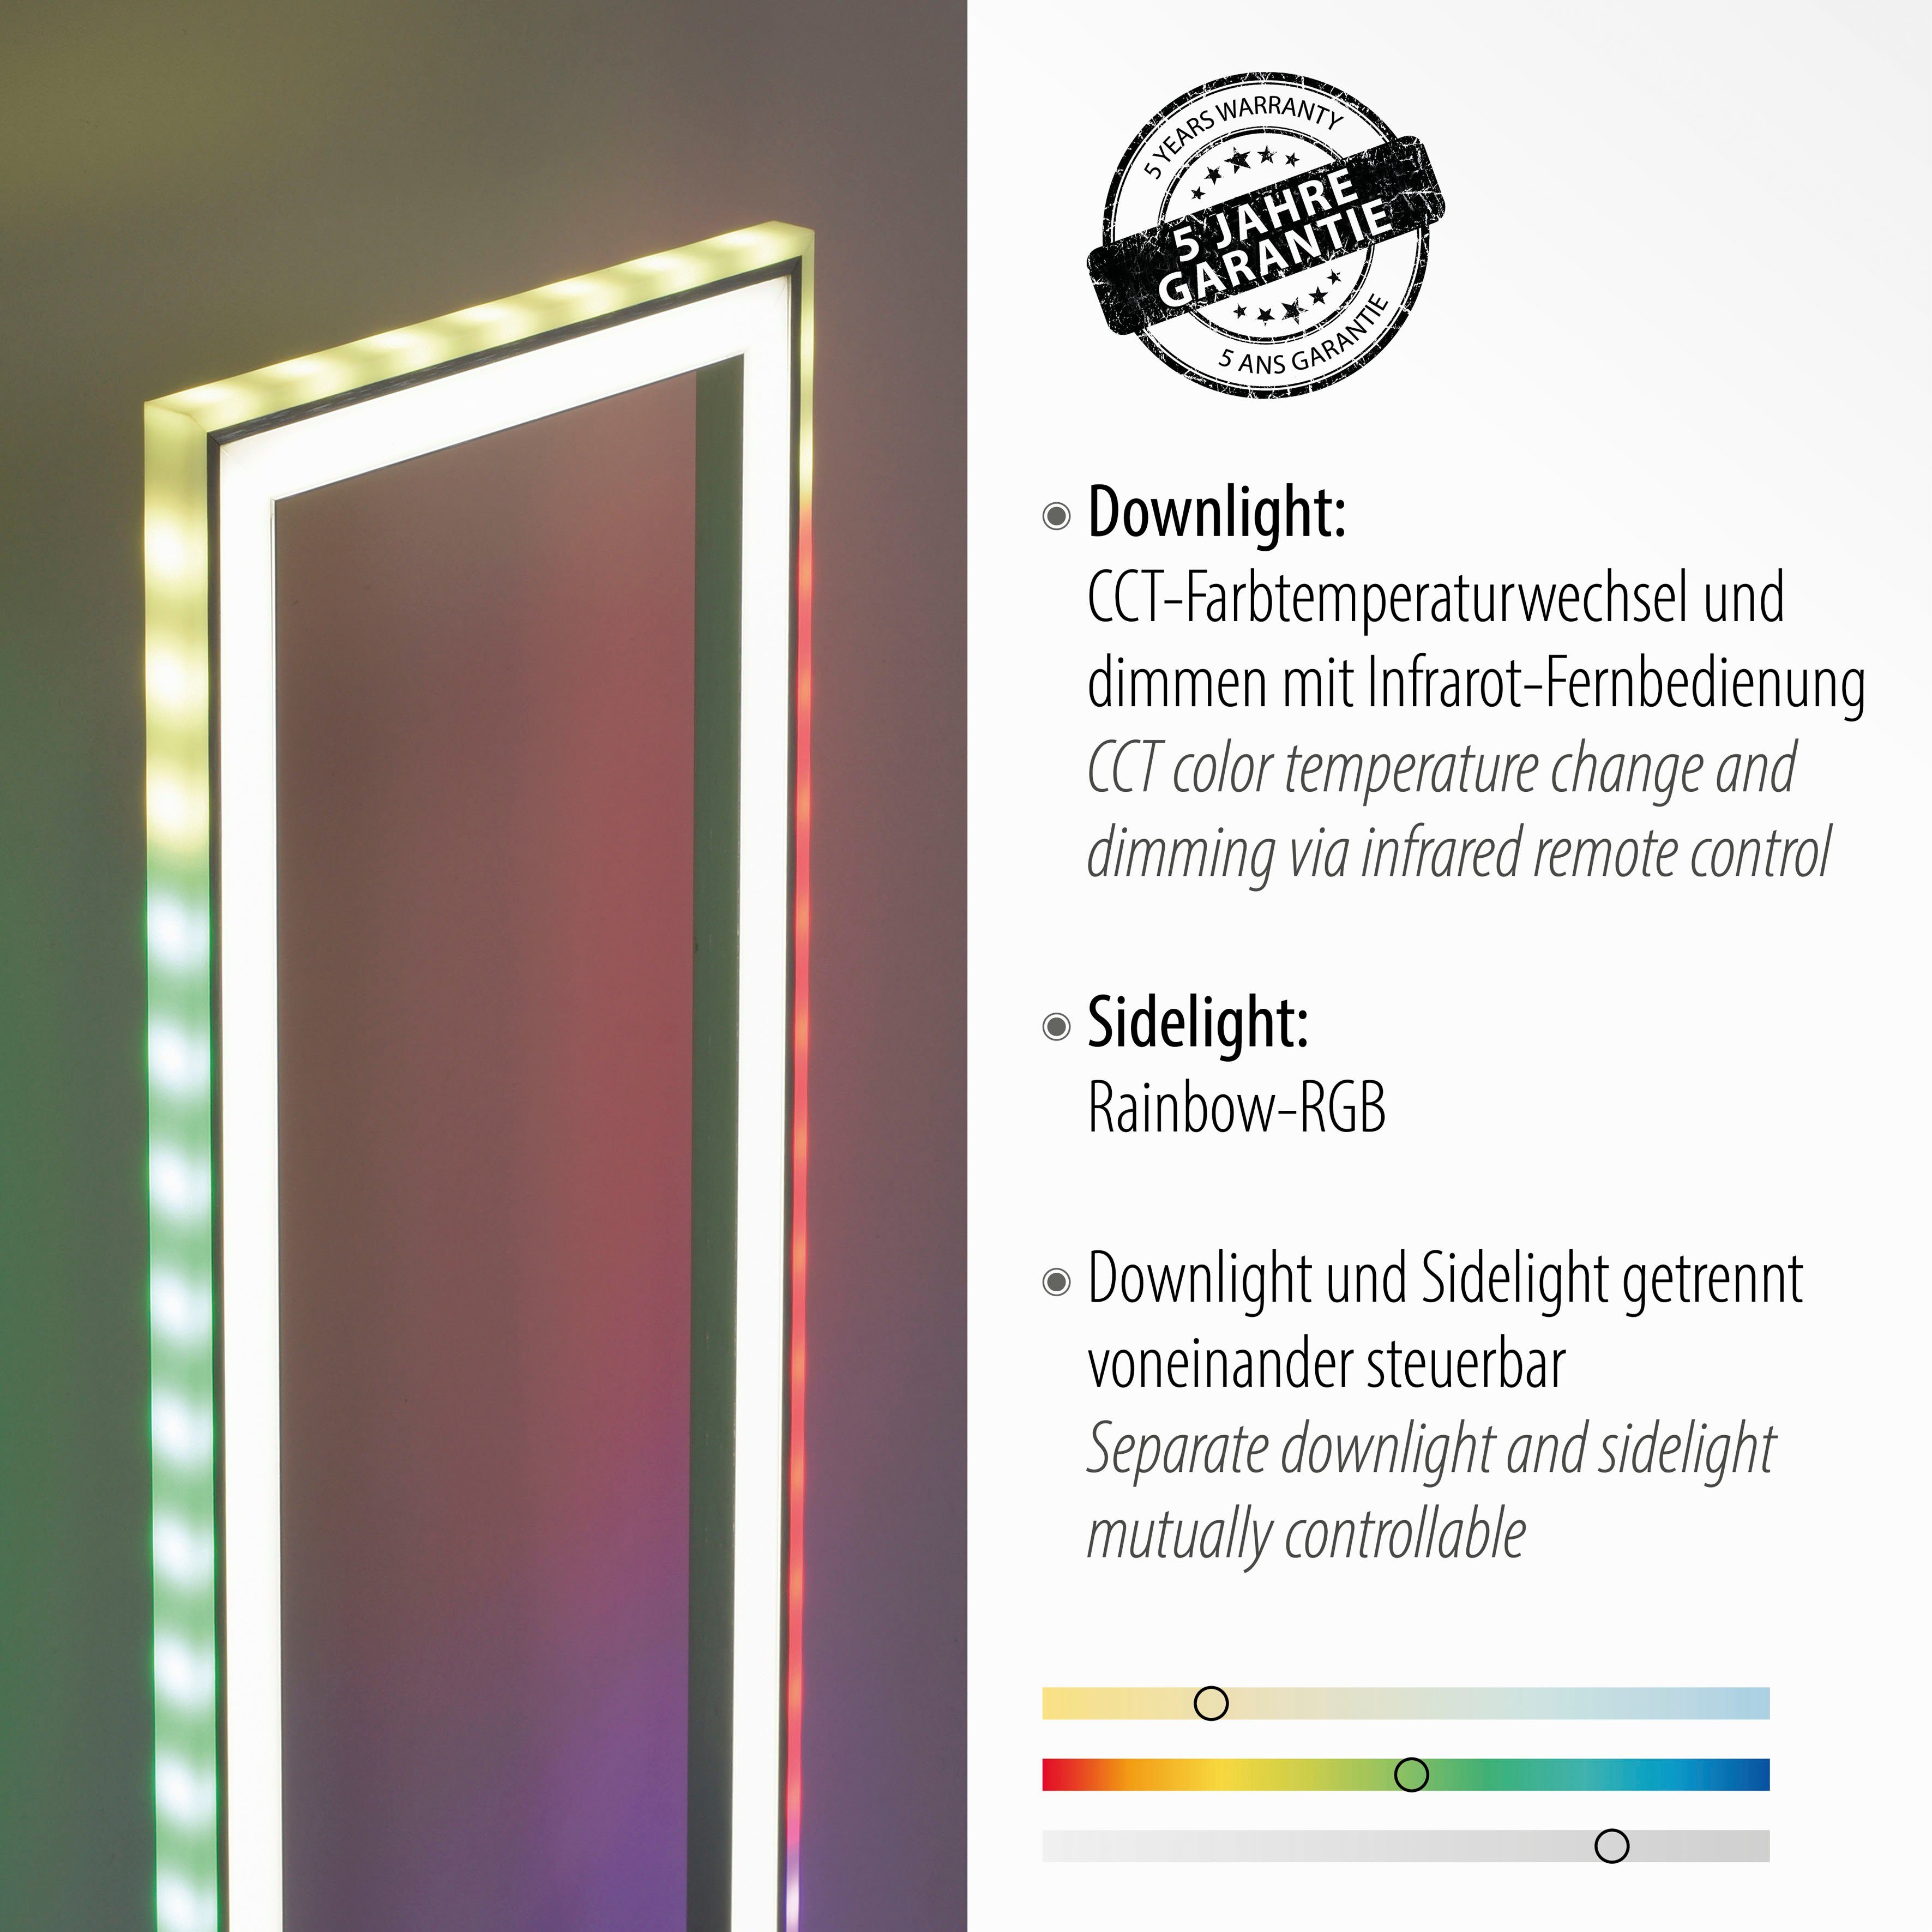 my home LED Stehlampe Luan, dimmbar über Fernbedienung, LED fest integriert,  warmweiß - kaltweiß, Downlight: 2700-5000K, Sidelight: Rainbow-RGB, Infrarot-Fernbed.